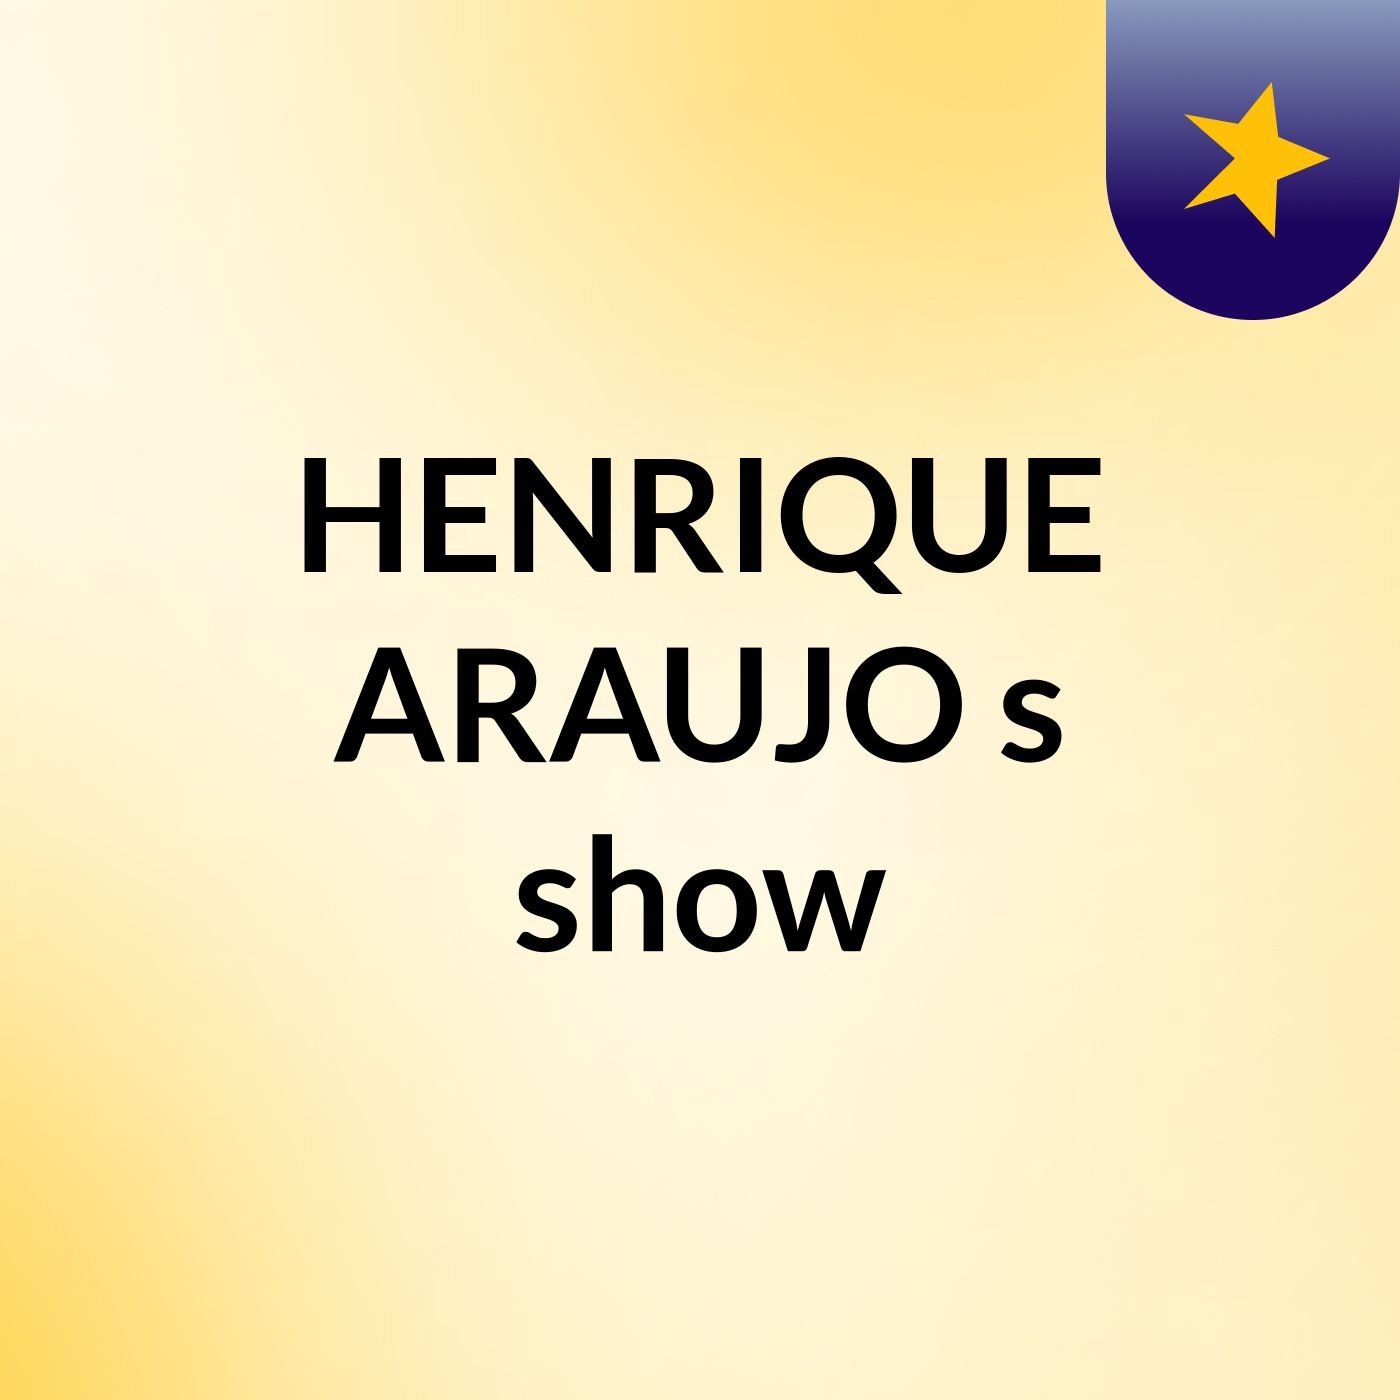 HENRIQUE ARAUJO's show